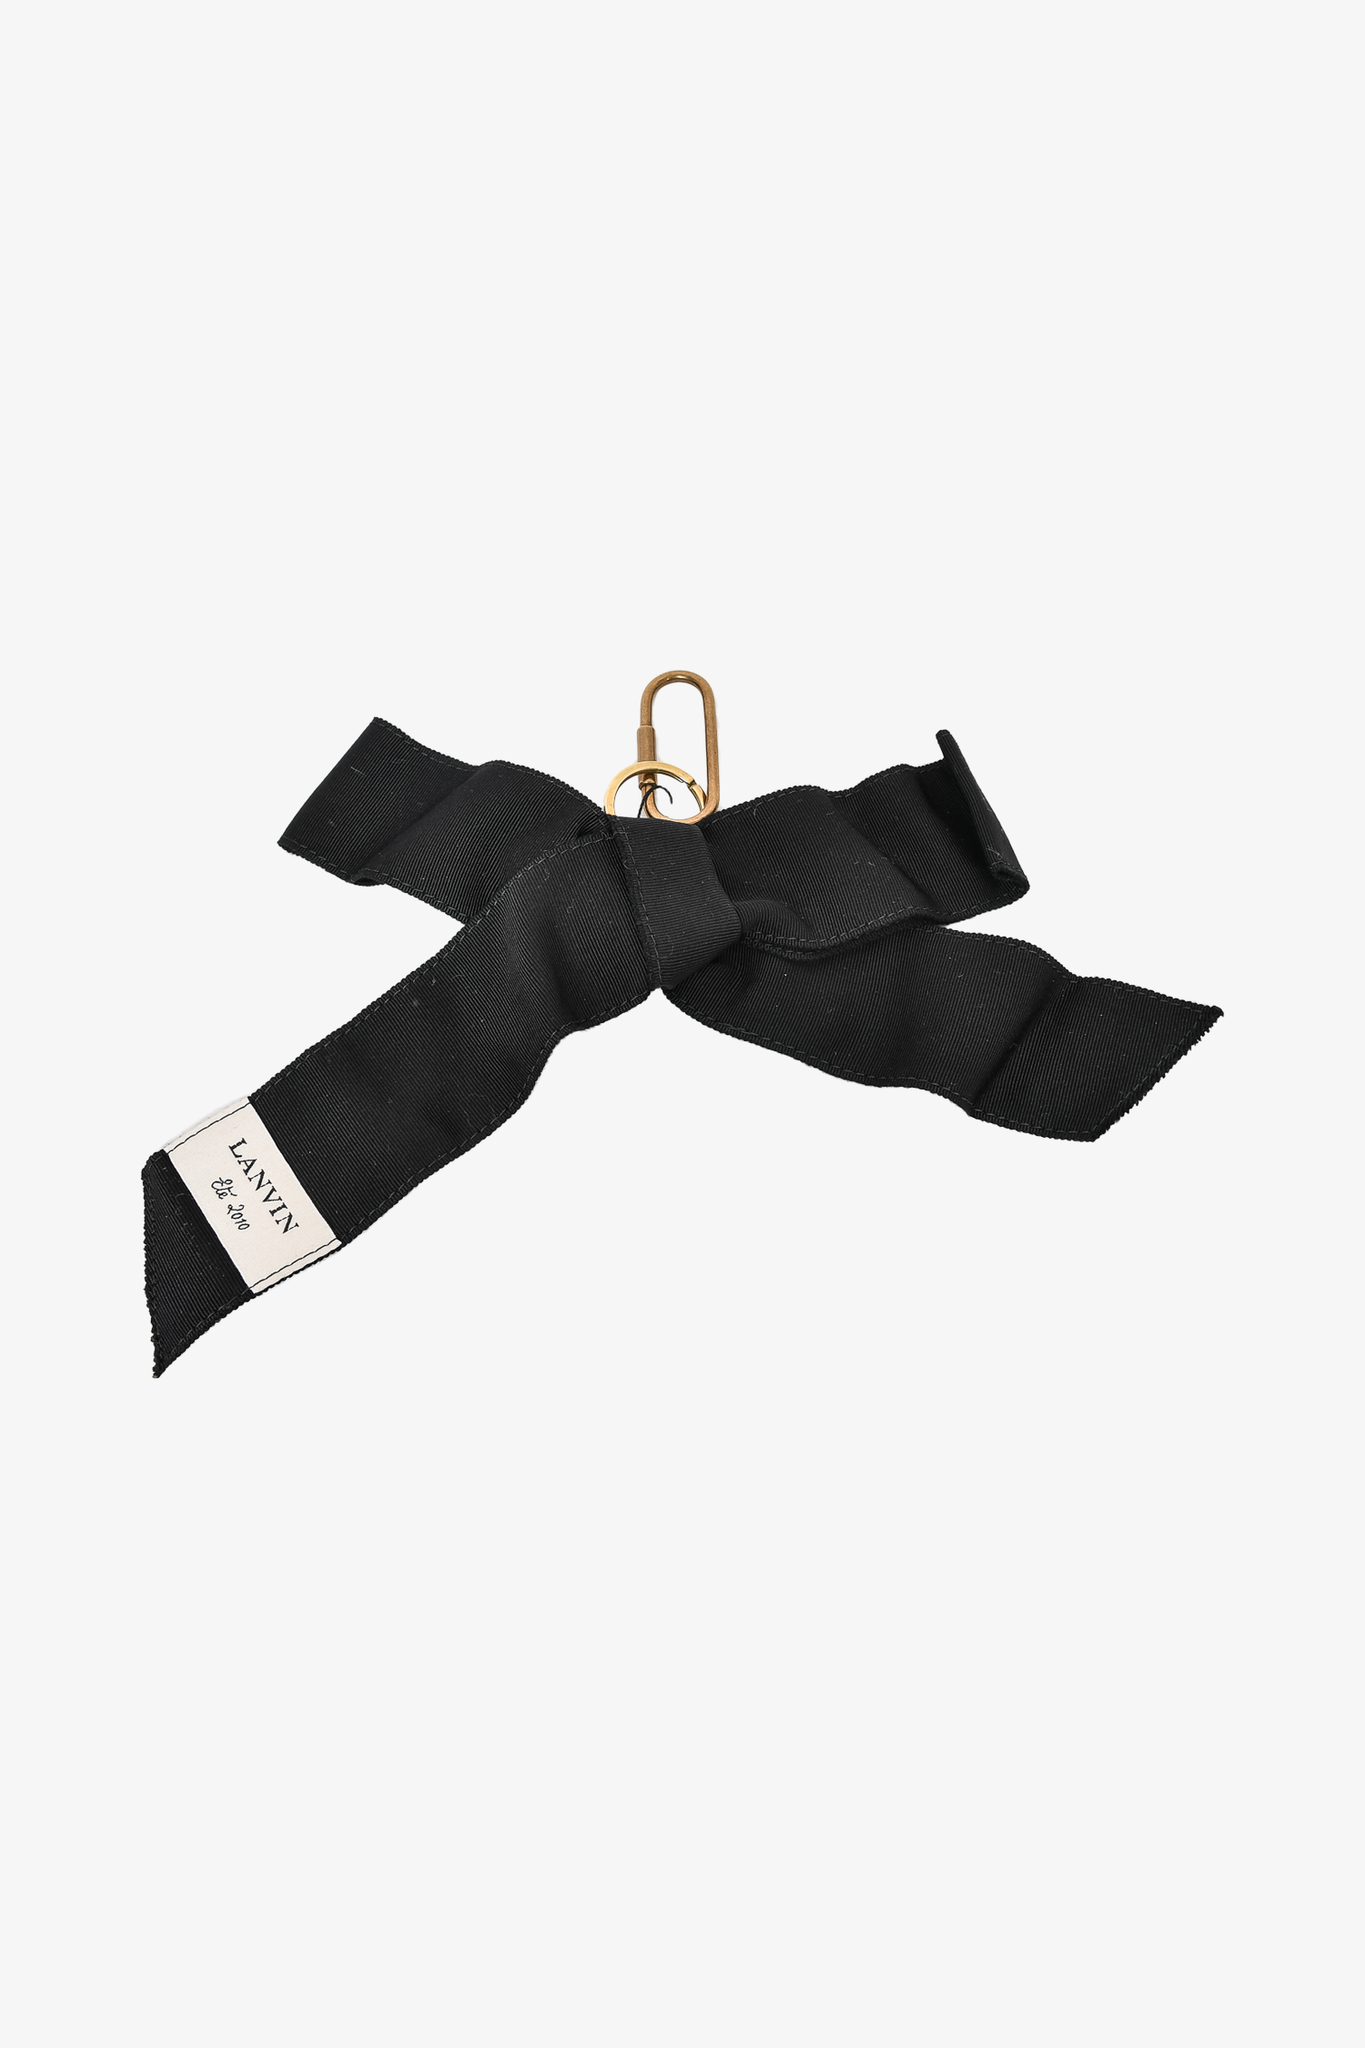 Lanvin Black Fabric Bow Key Chain